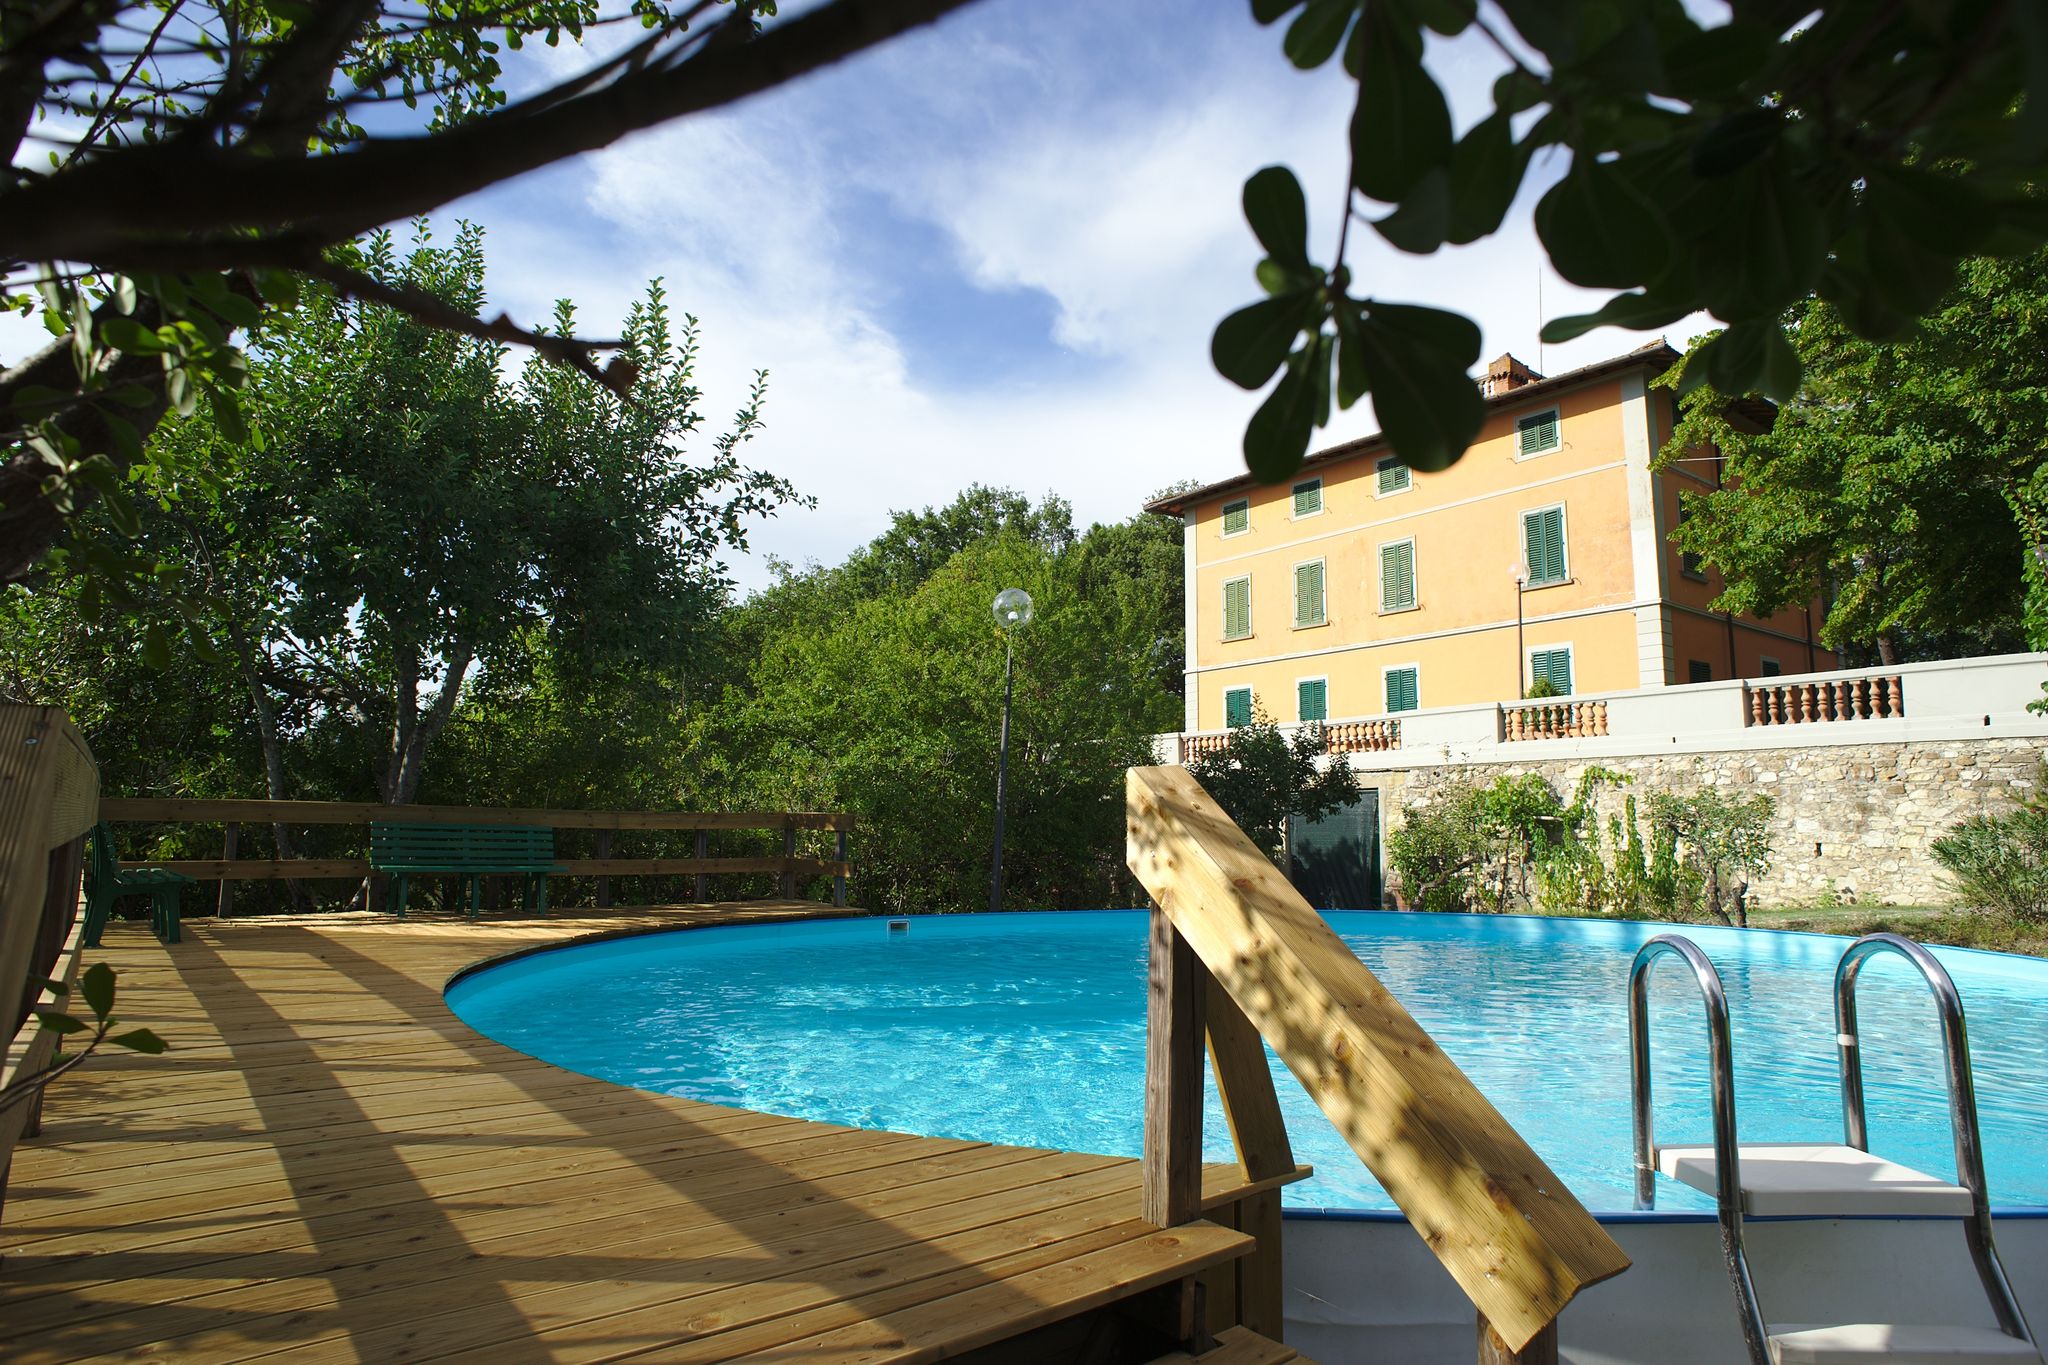 Peaceful Holiday Home with Pool in Montefiridolfi Italy